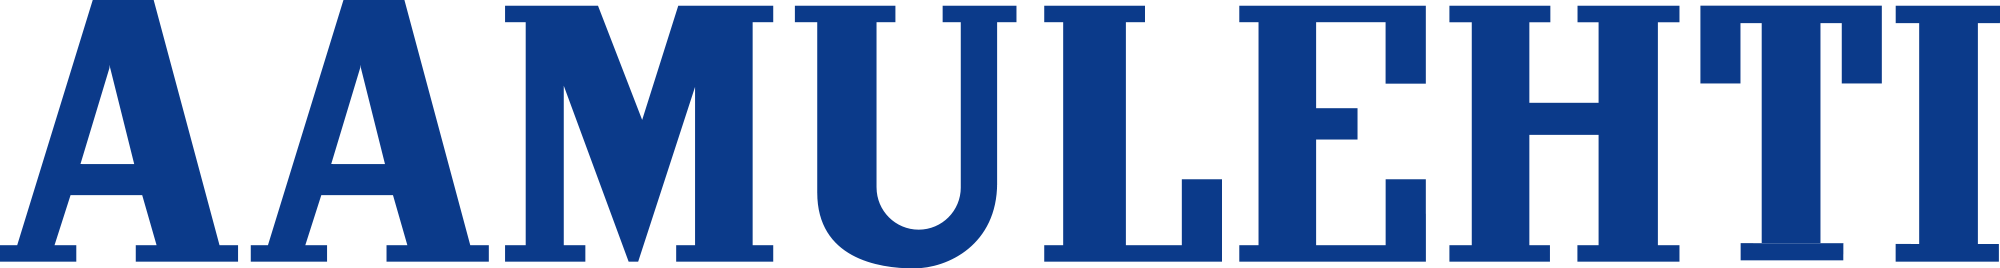 Aamulehti Logo